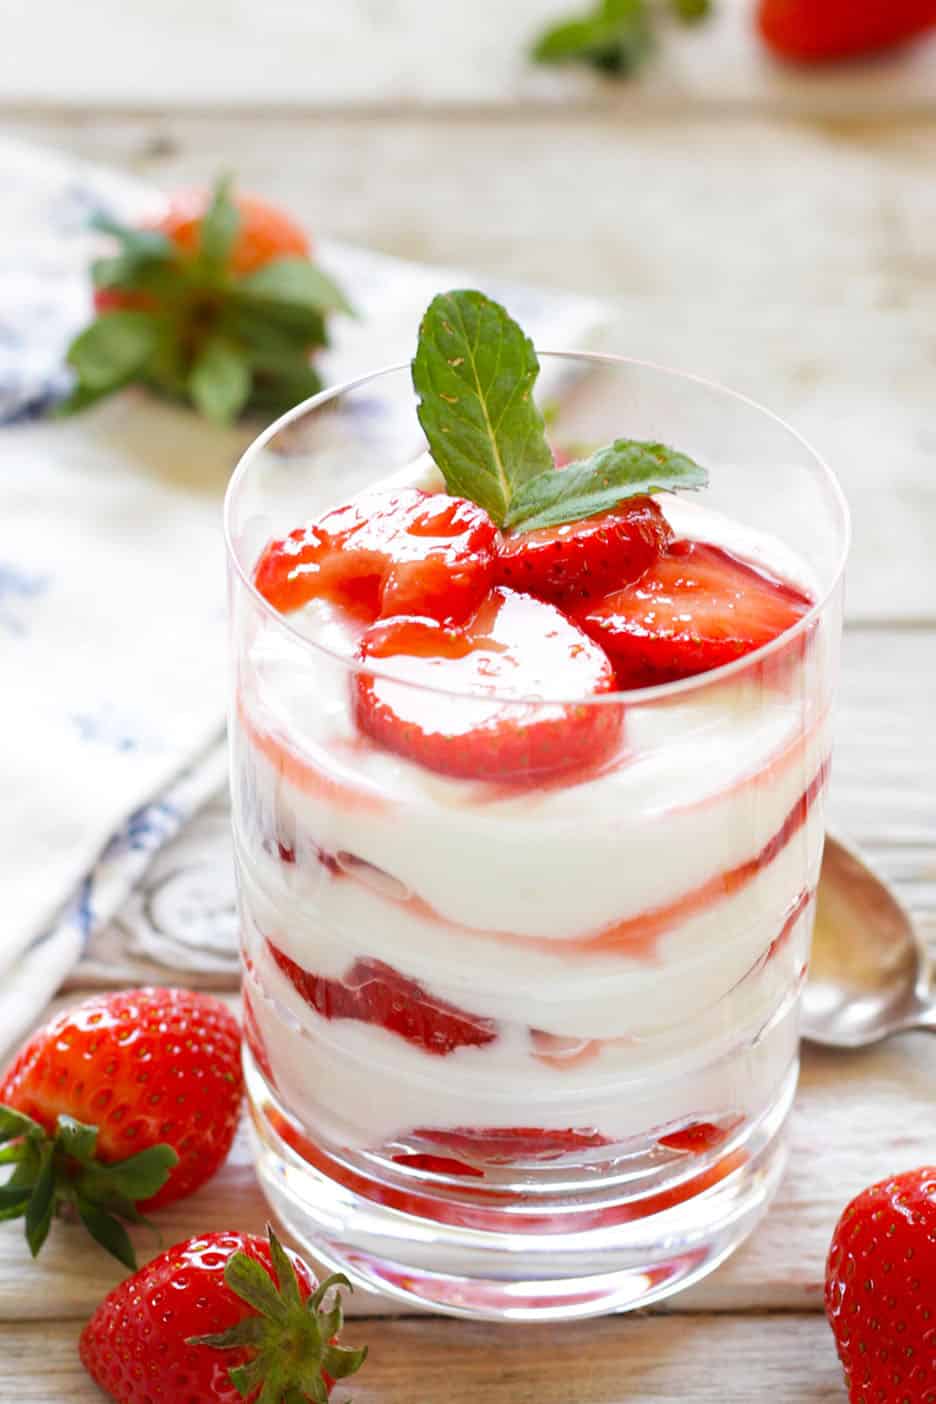 Topfen Cream (Quark Cream) with Strawberries - Living on Cookies